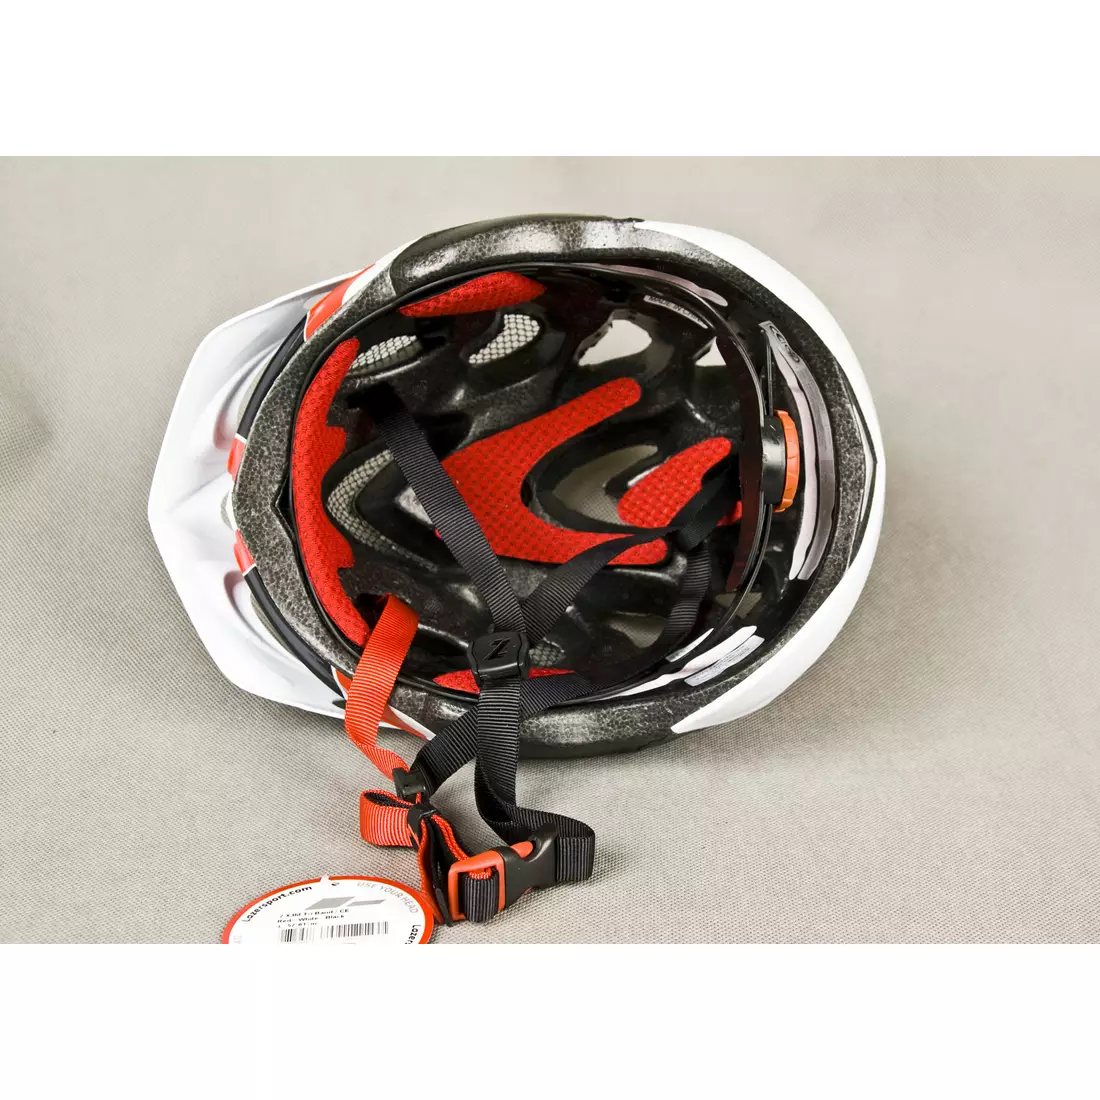 LAZER - 2X3M MTB bicycle helmet, color: red white black